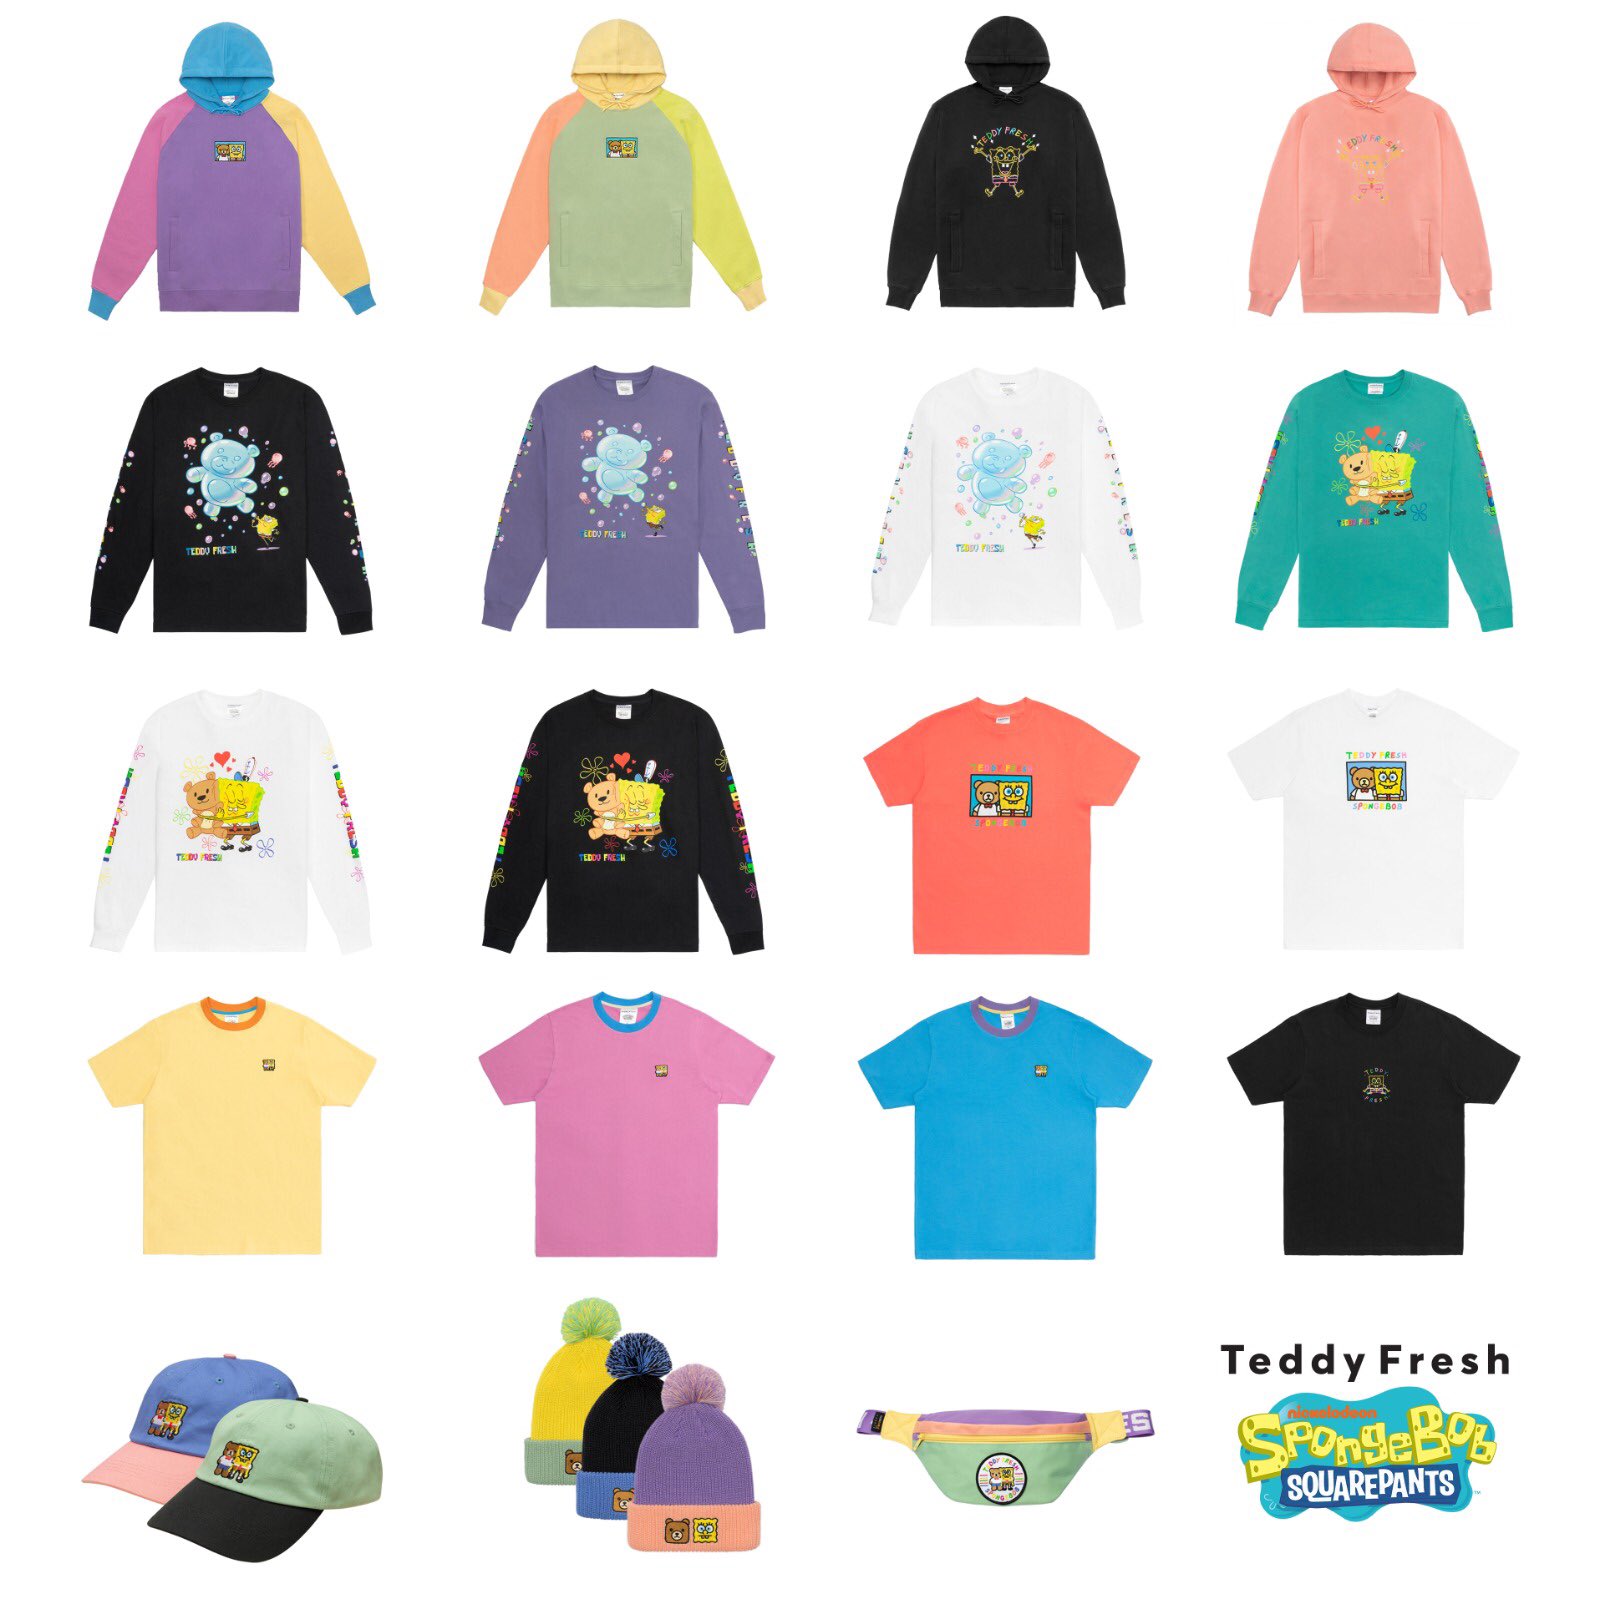 NickALive!: 'Teddy Fresh' Streetwear Brand Releases SpongeBob